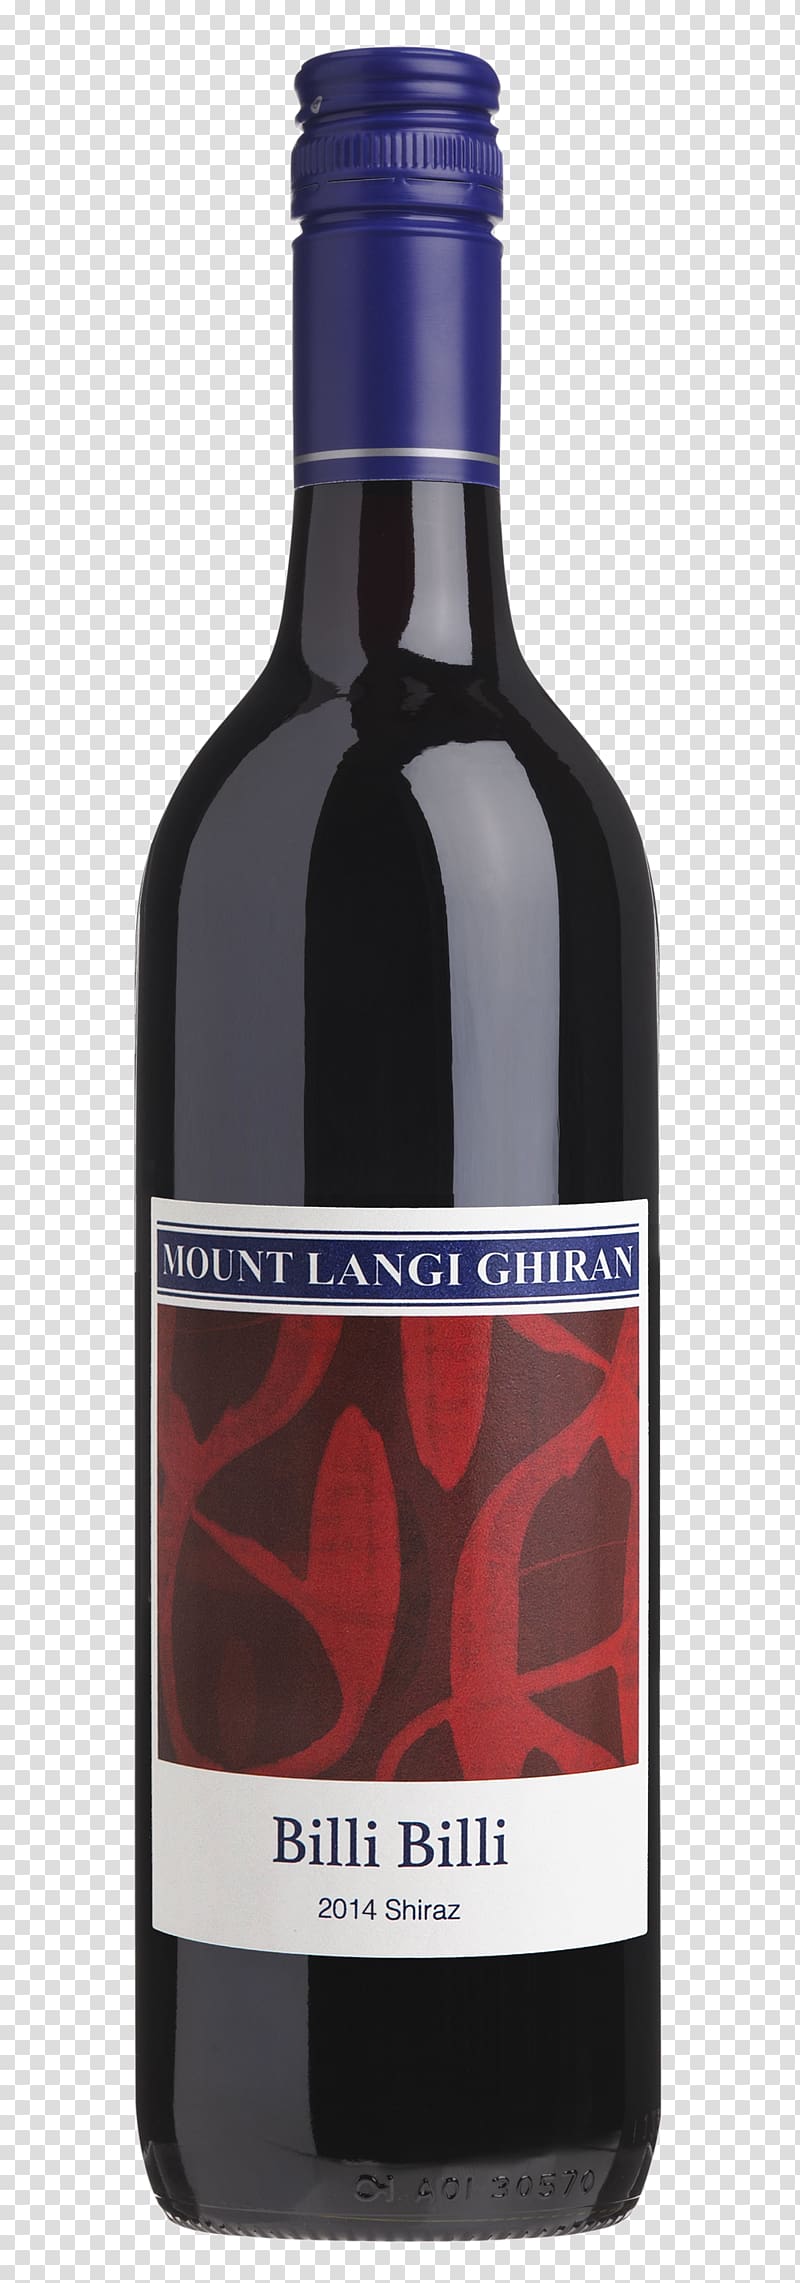 Mount Langi Ghiran Billi Billi Shiraz 2015 Liqueur Red Wine, Cliffhanger Pinot Grigio transparent background PNG clipart